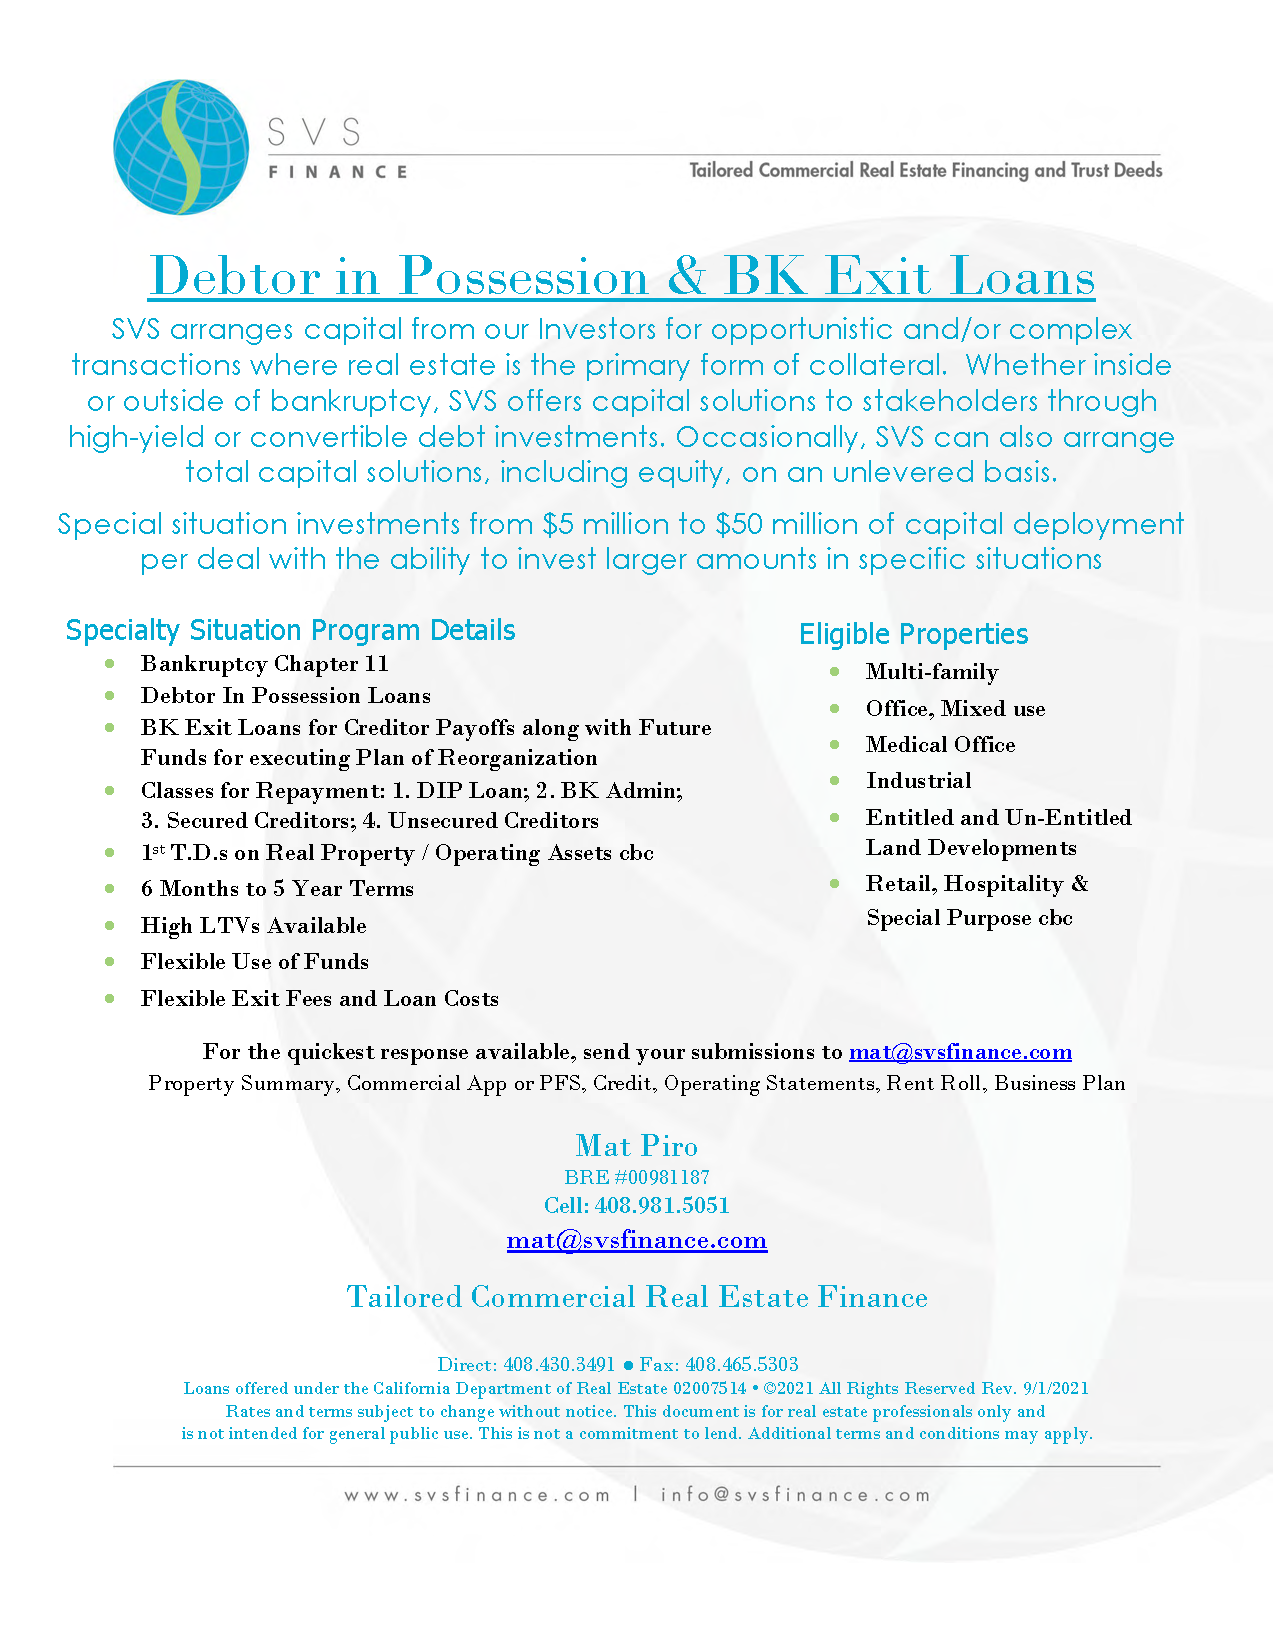 DIP and BK Exit Loans